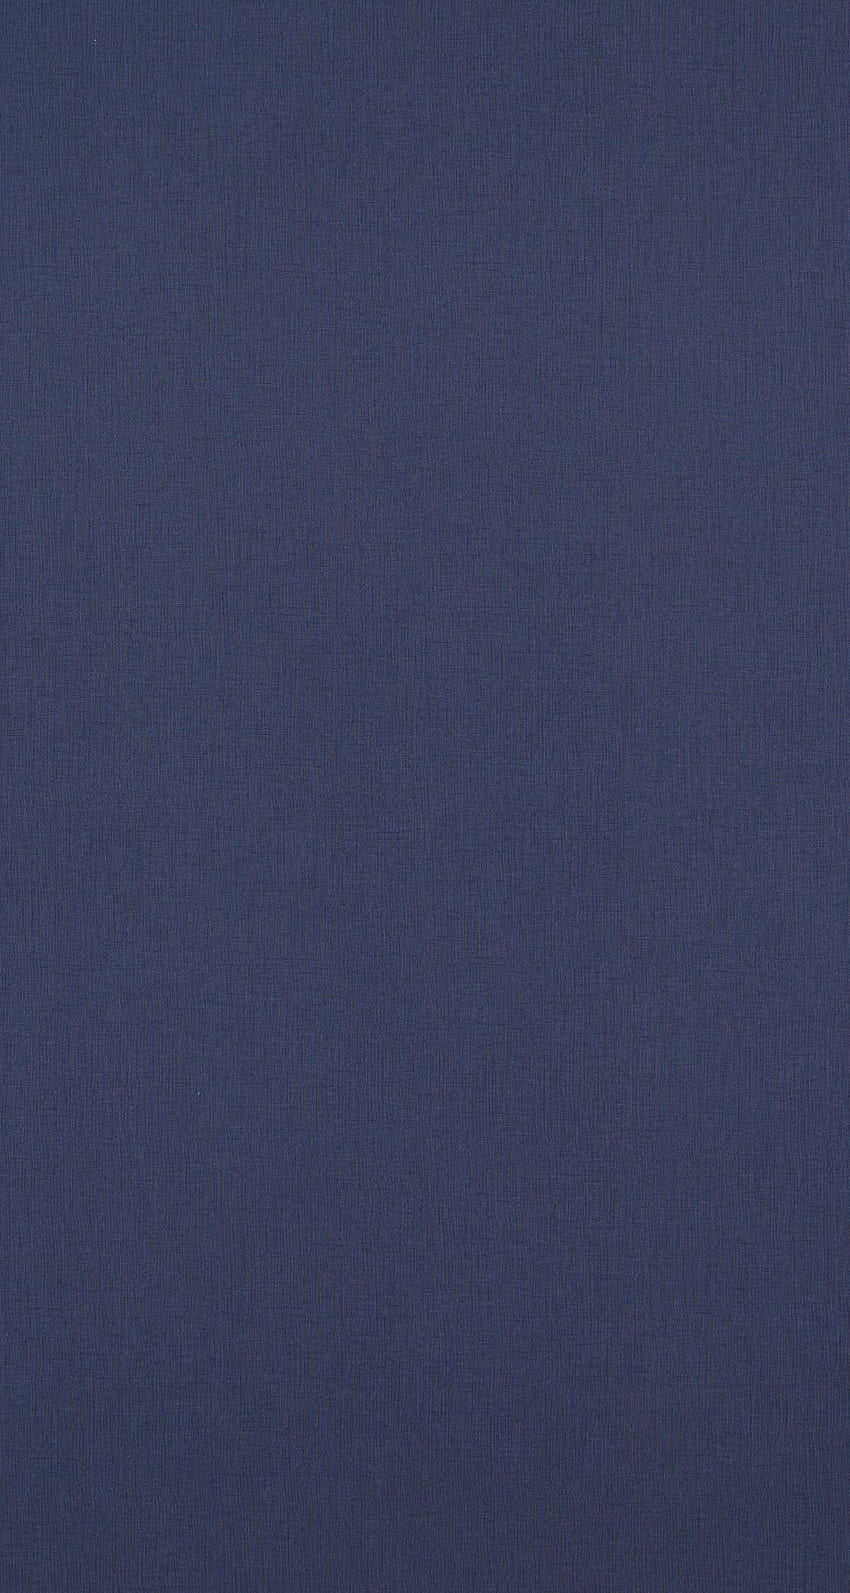 Plain Dark Blue Wallpapers  Wallpaper Cave